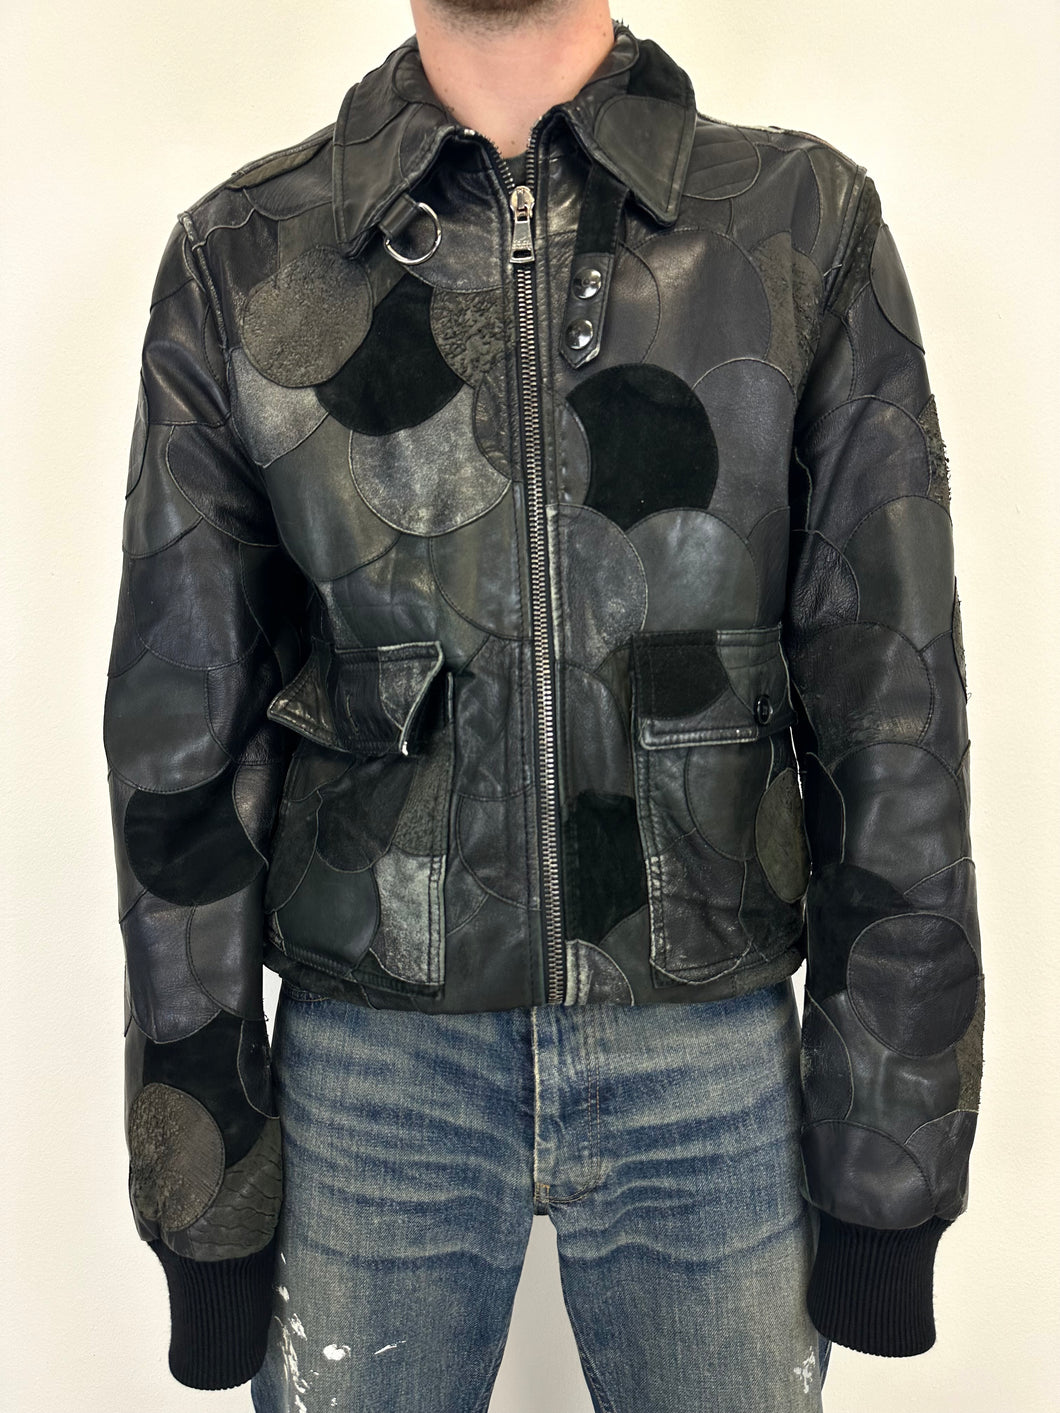 AW2008 Dolce & Gabbana patchwork bomber leather jacket